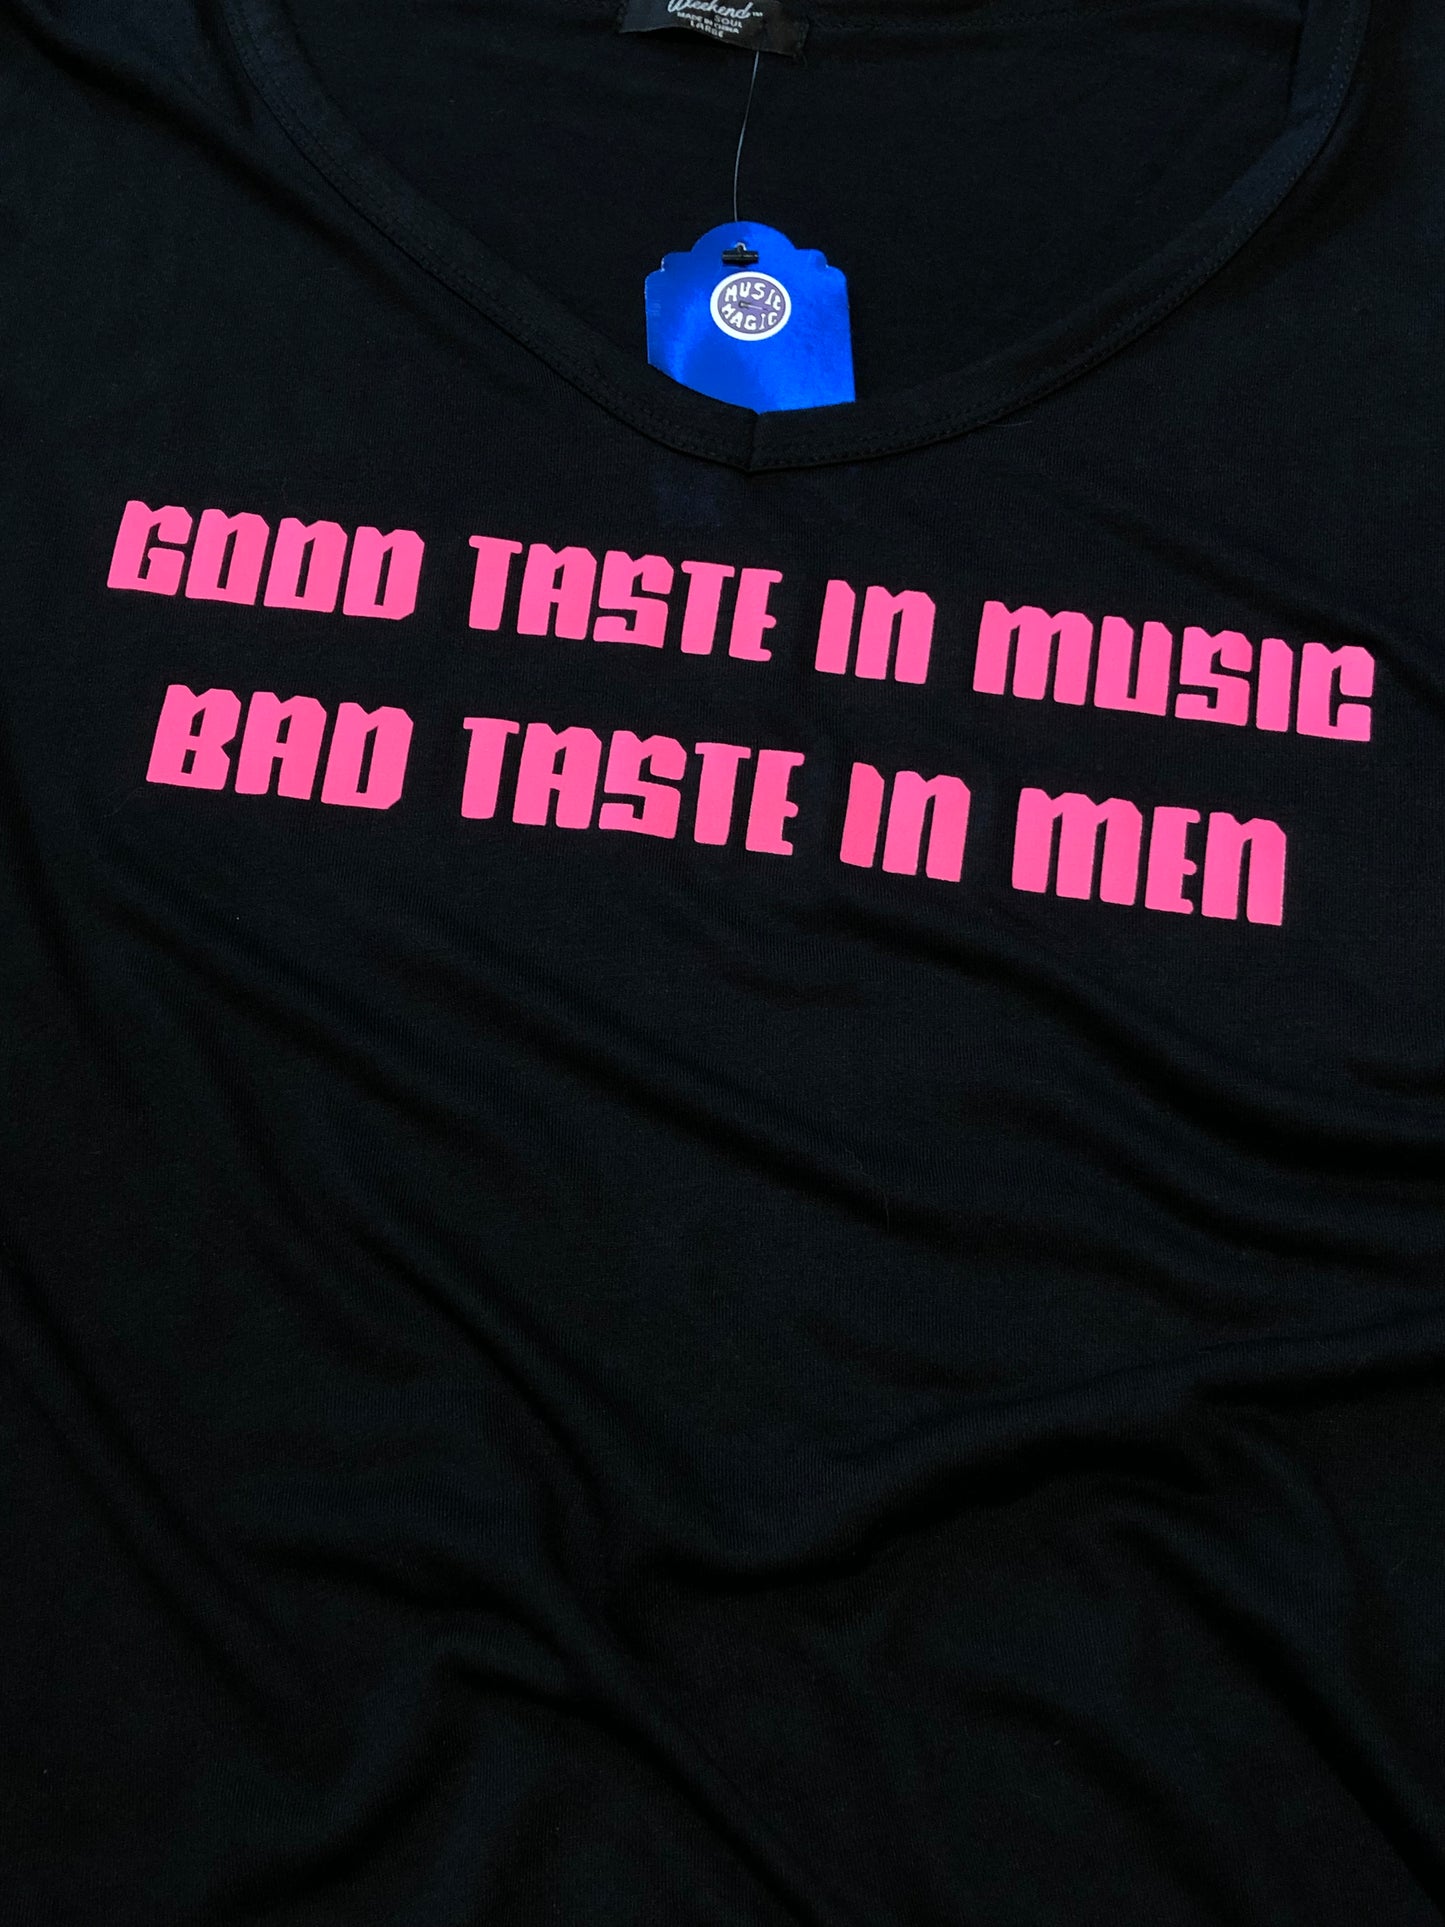 Good Taste in Music Tee Shirt